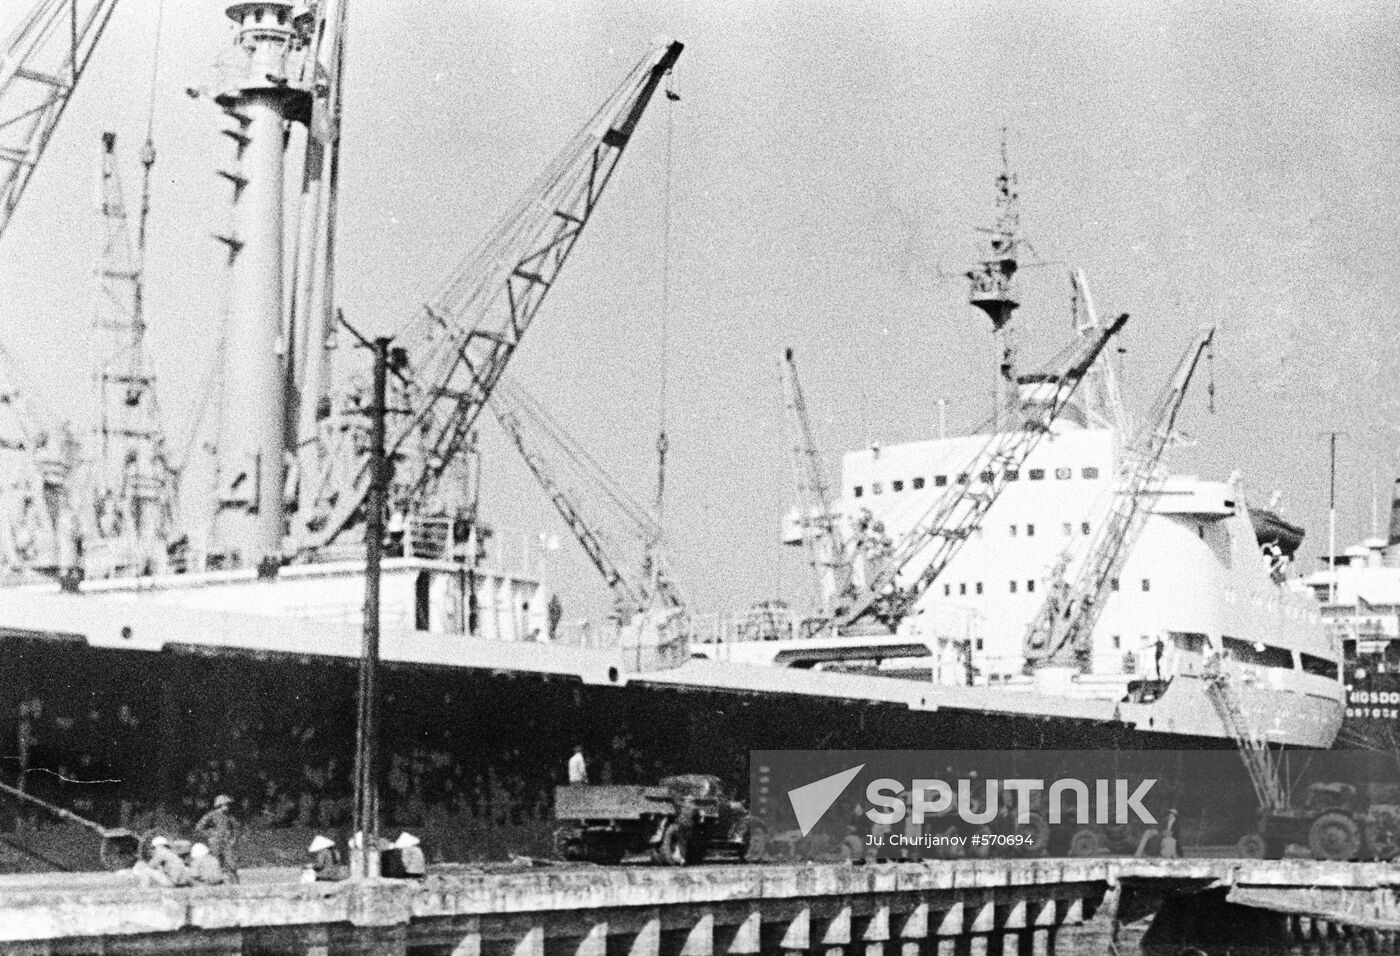 Unloading of the Soviet ship